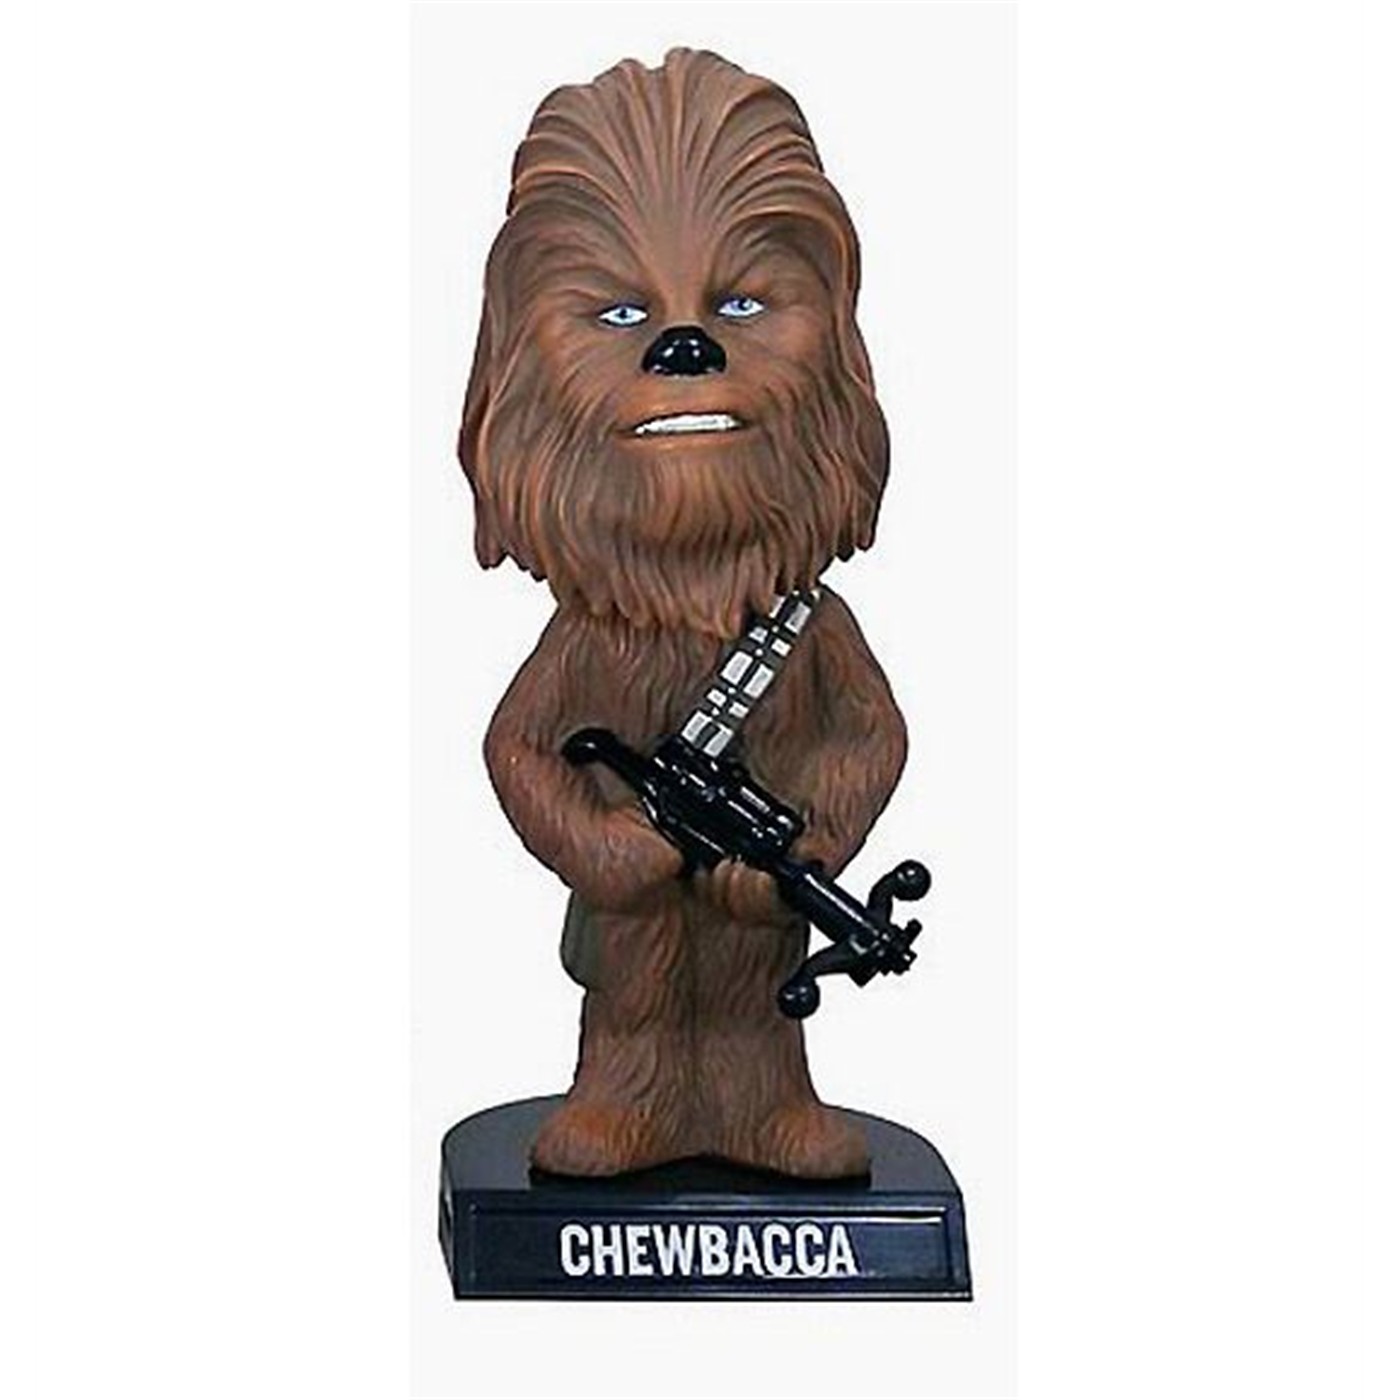 Star Wars Chewbacca Bobble Head